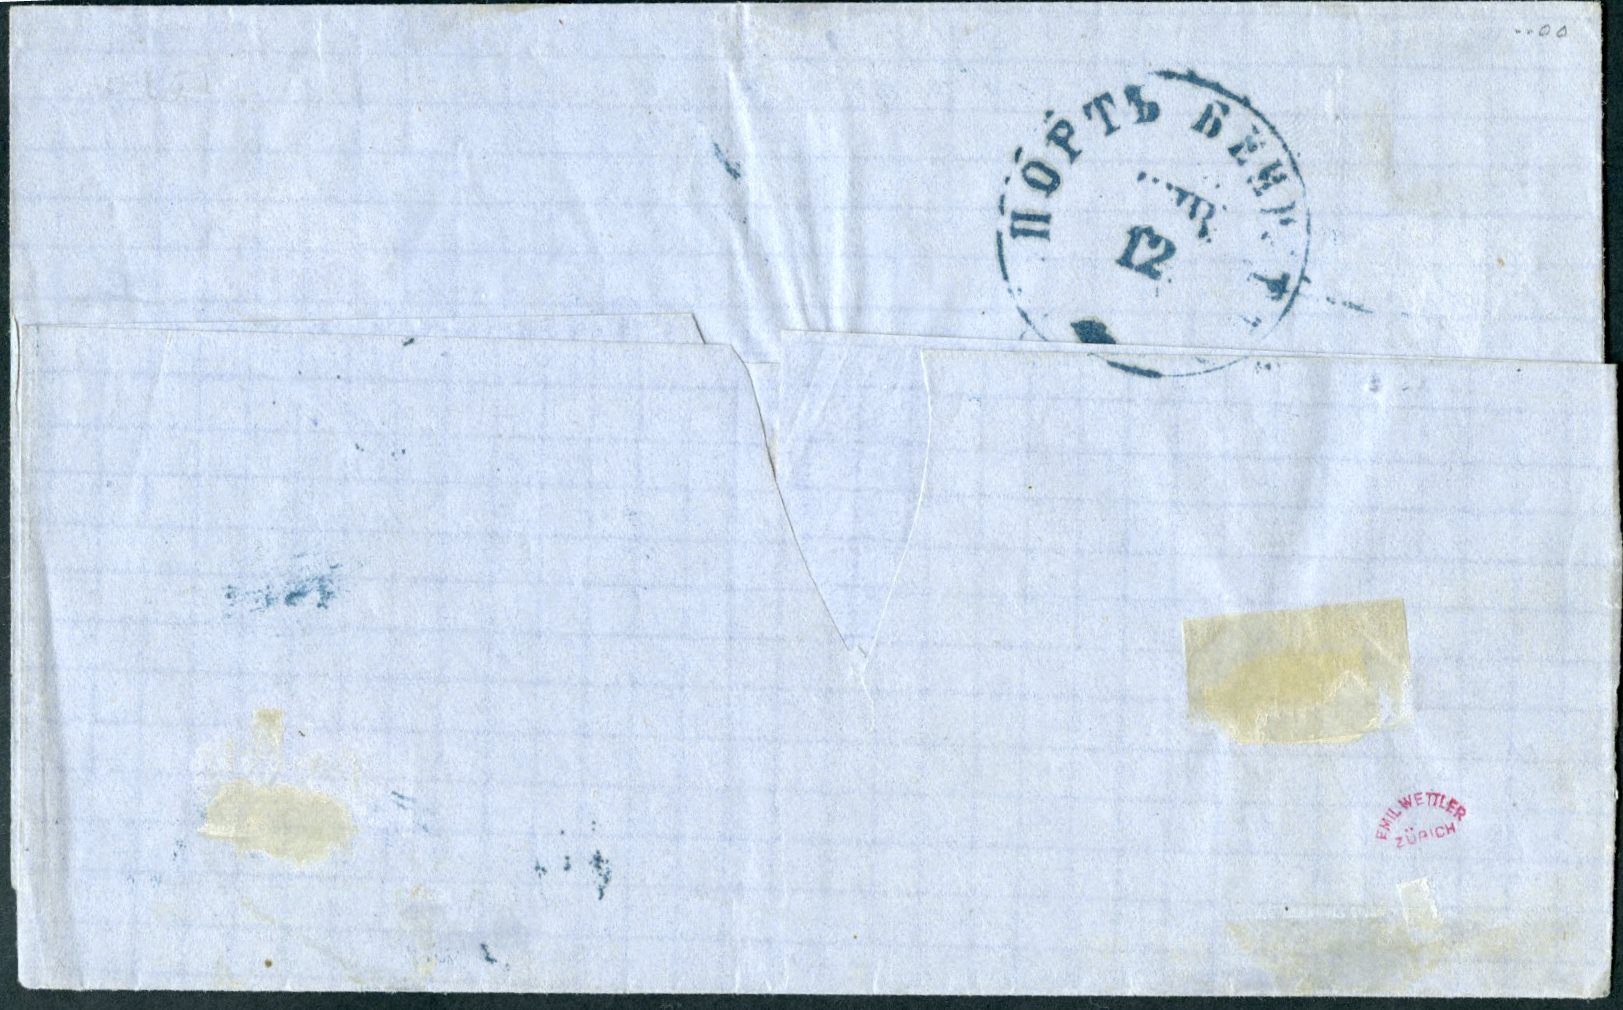 Lot 65 - RUSSIAN POST  -  Tel Aviv Stamps Ltd. Auction #51